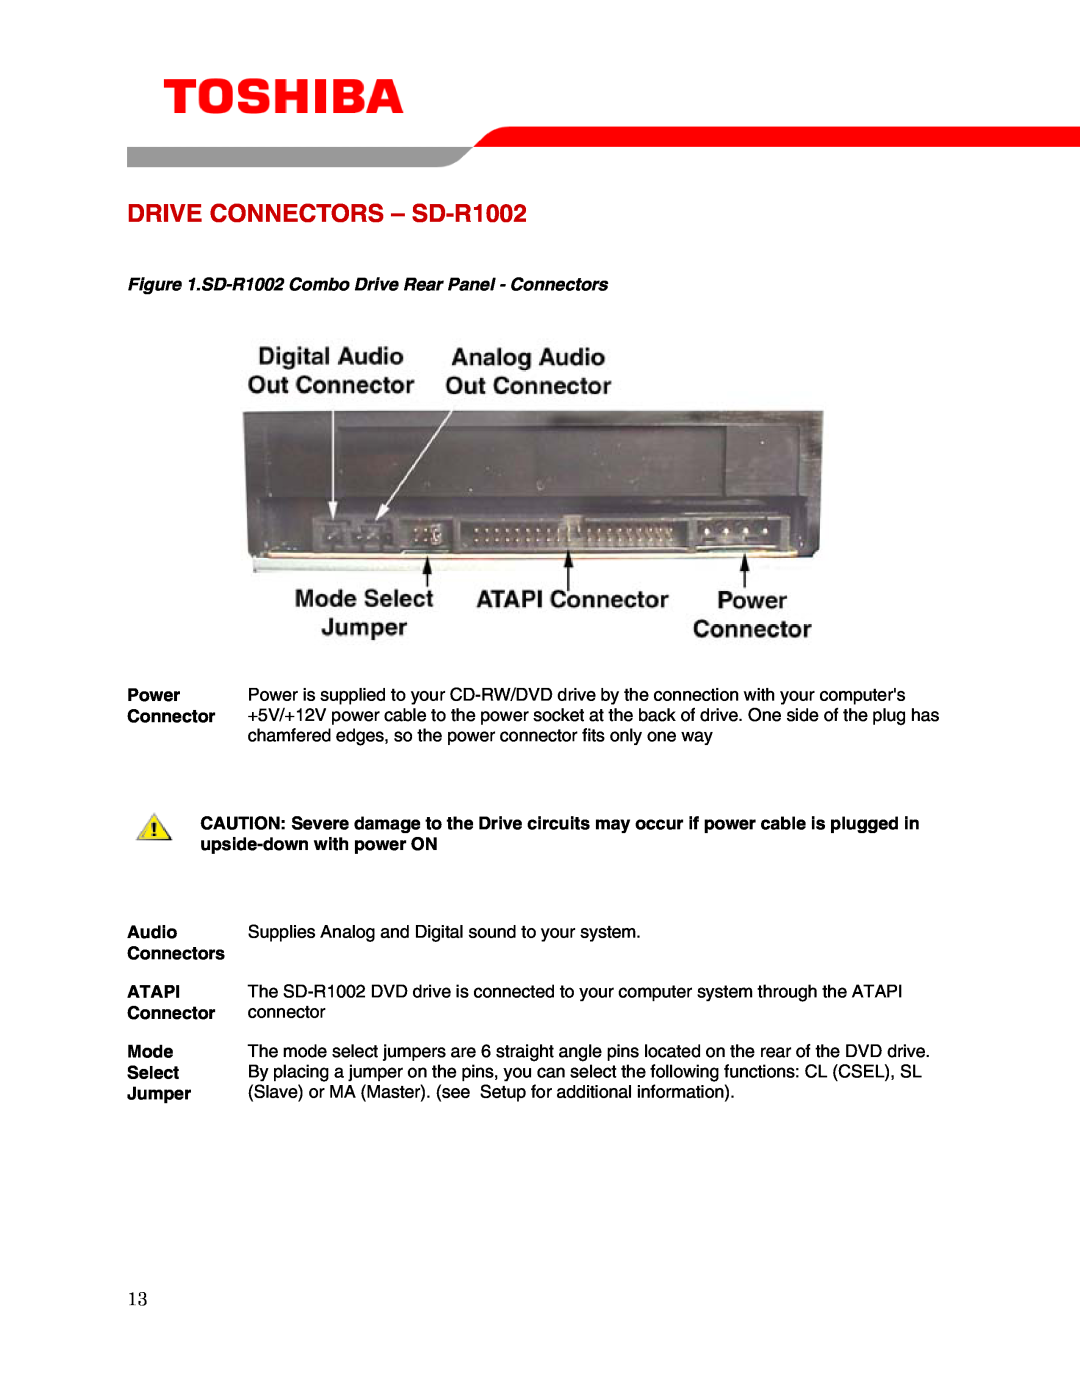 Toshiba user manual DRIVE CONNECTORS - SD-R1002, SD-R1002 Combo Drive Rear Panel - Connectors 